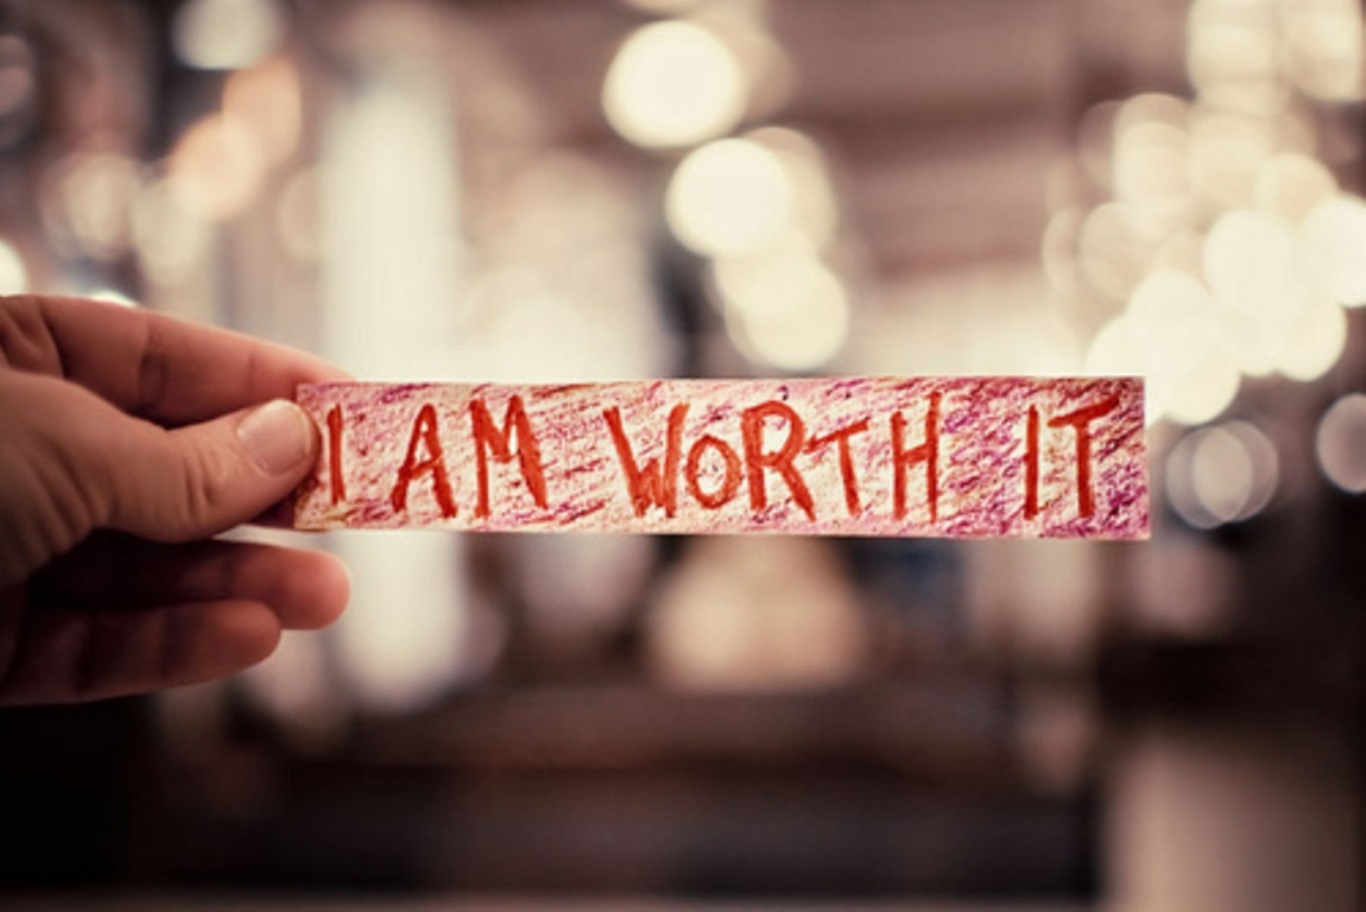 I am worth it